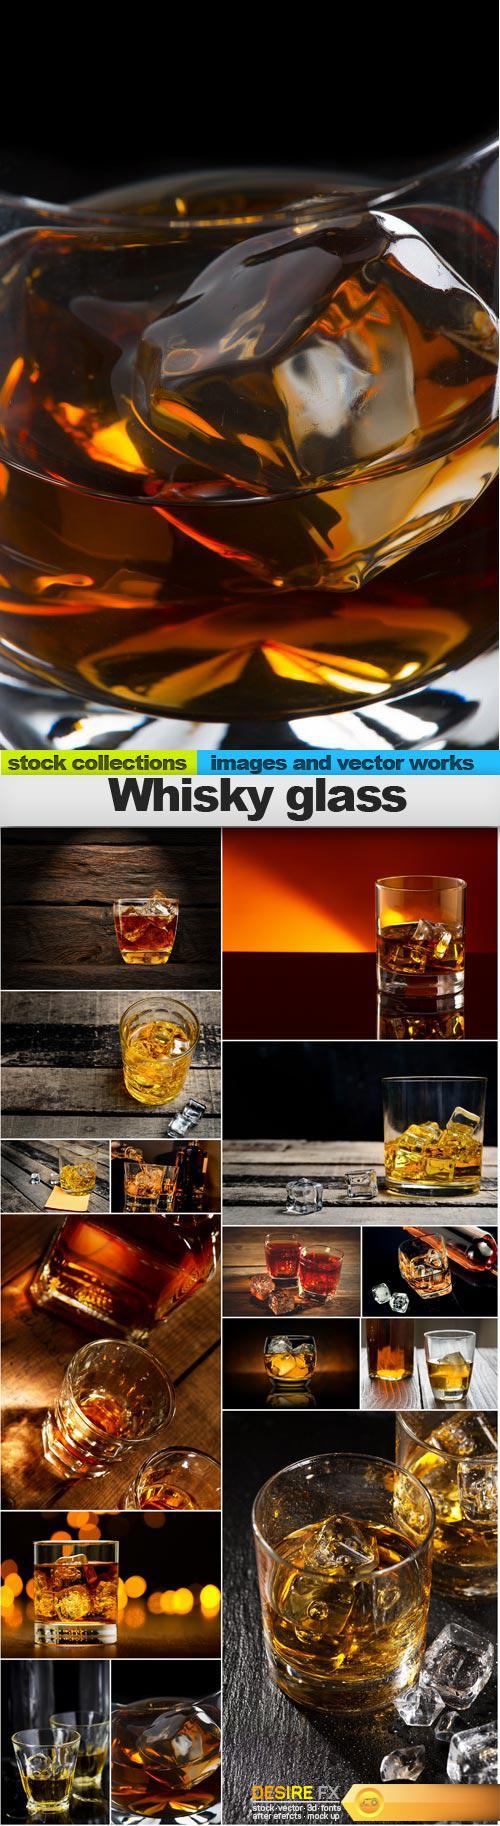 Whisky glass, 15 x UHQ JPEG